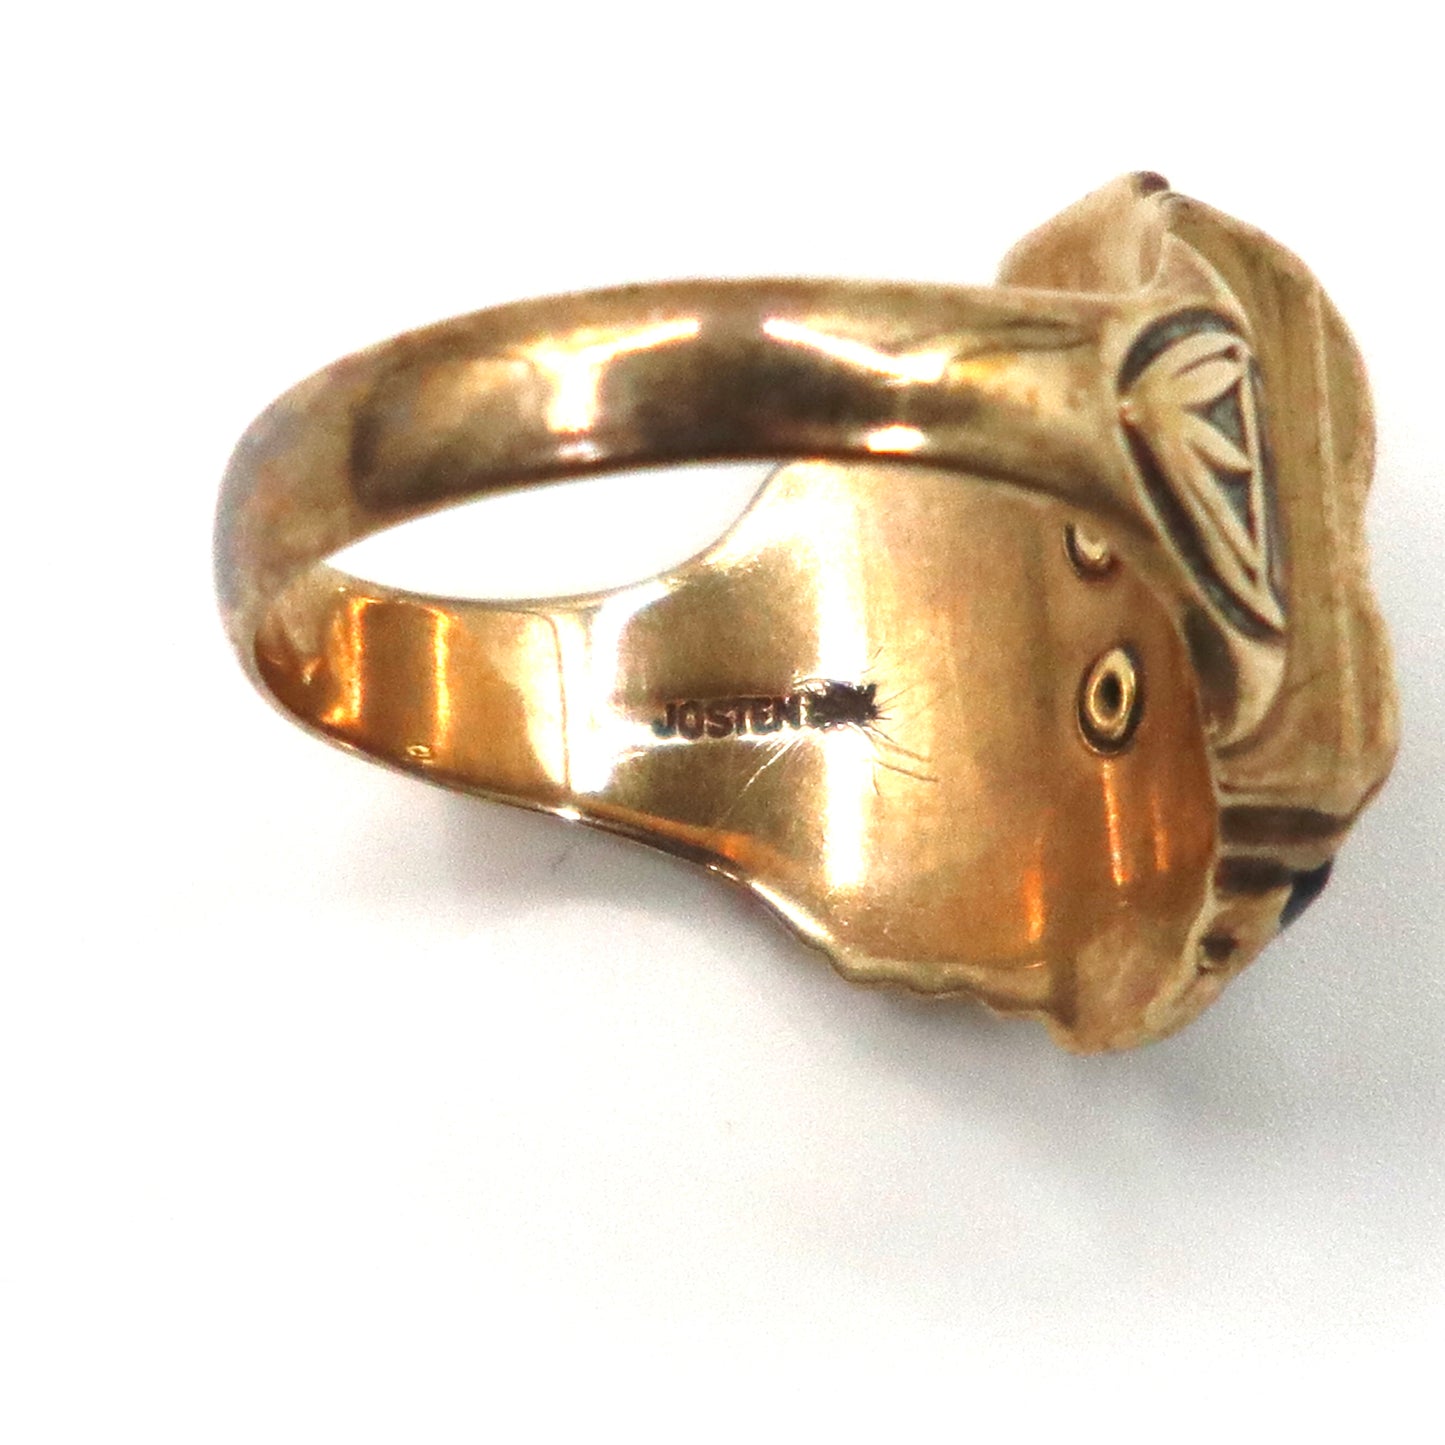 JOSTENS College Ring 10.5 US Gold 1954 MADE 10K (10 karat Gold 